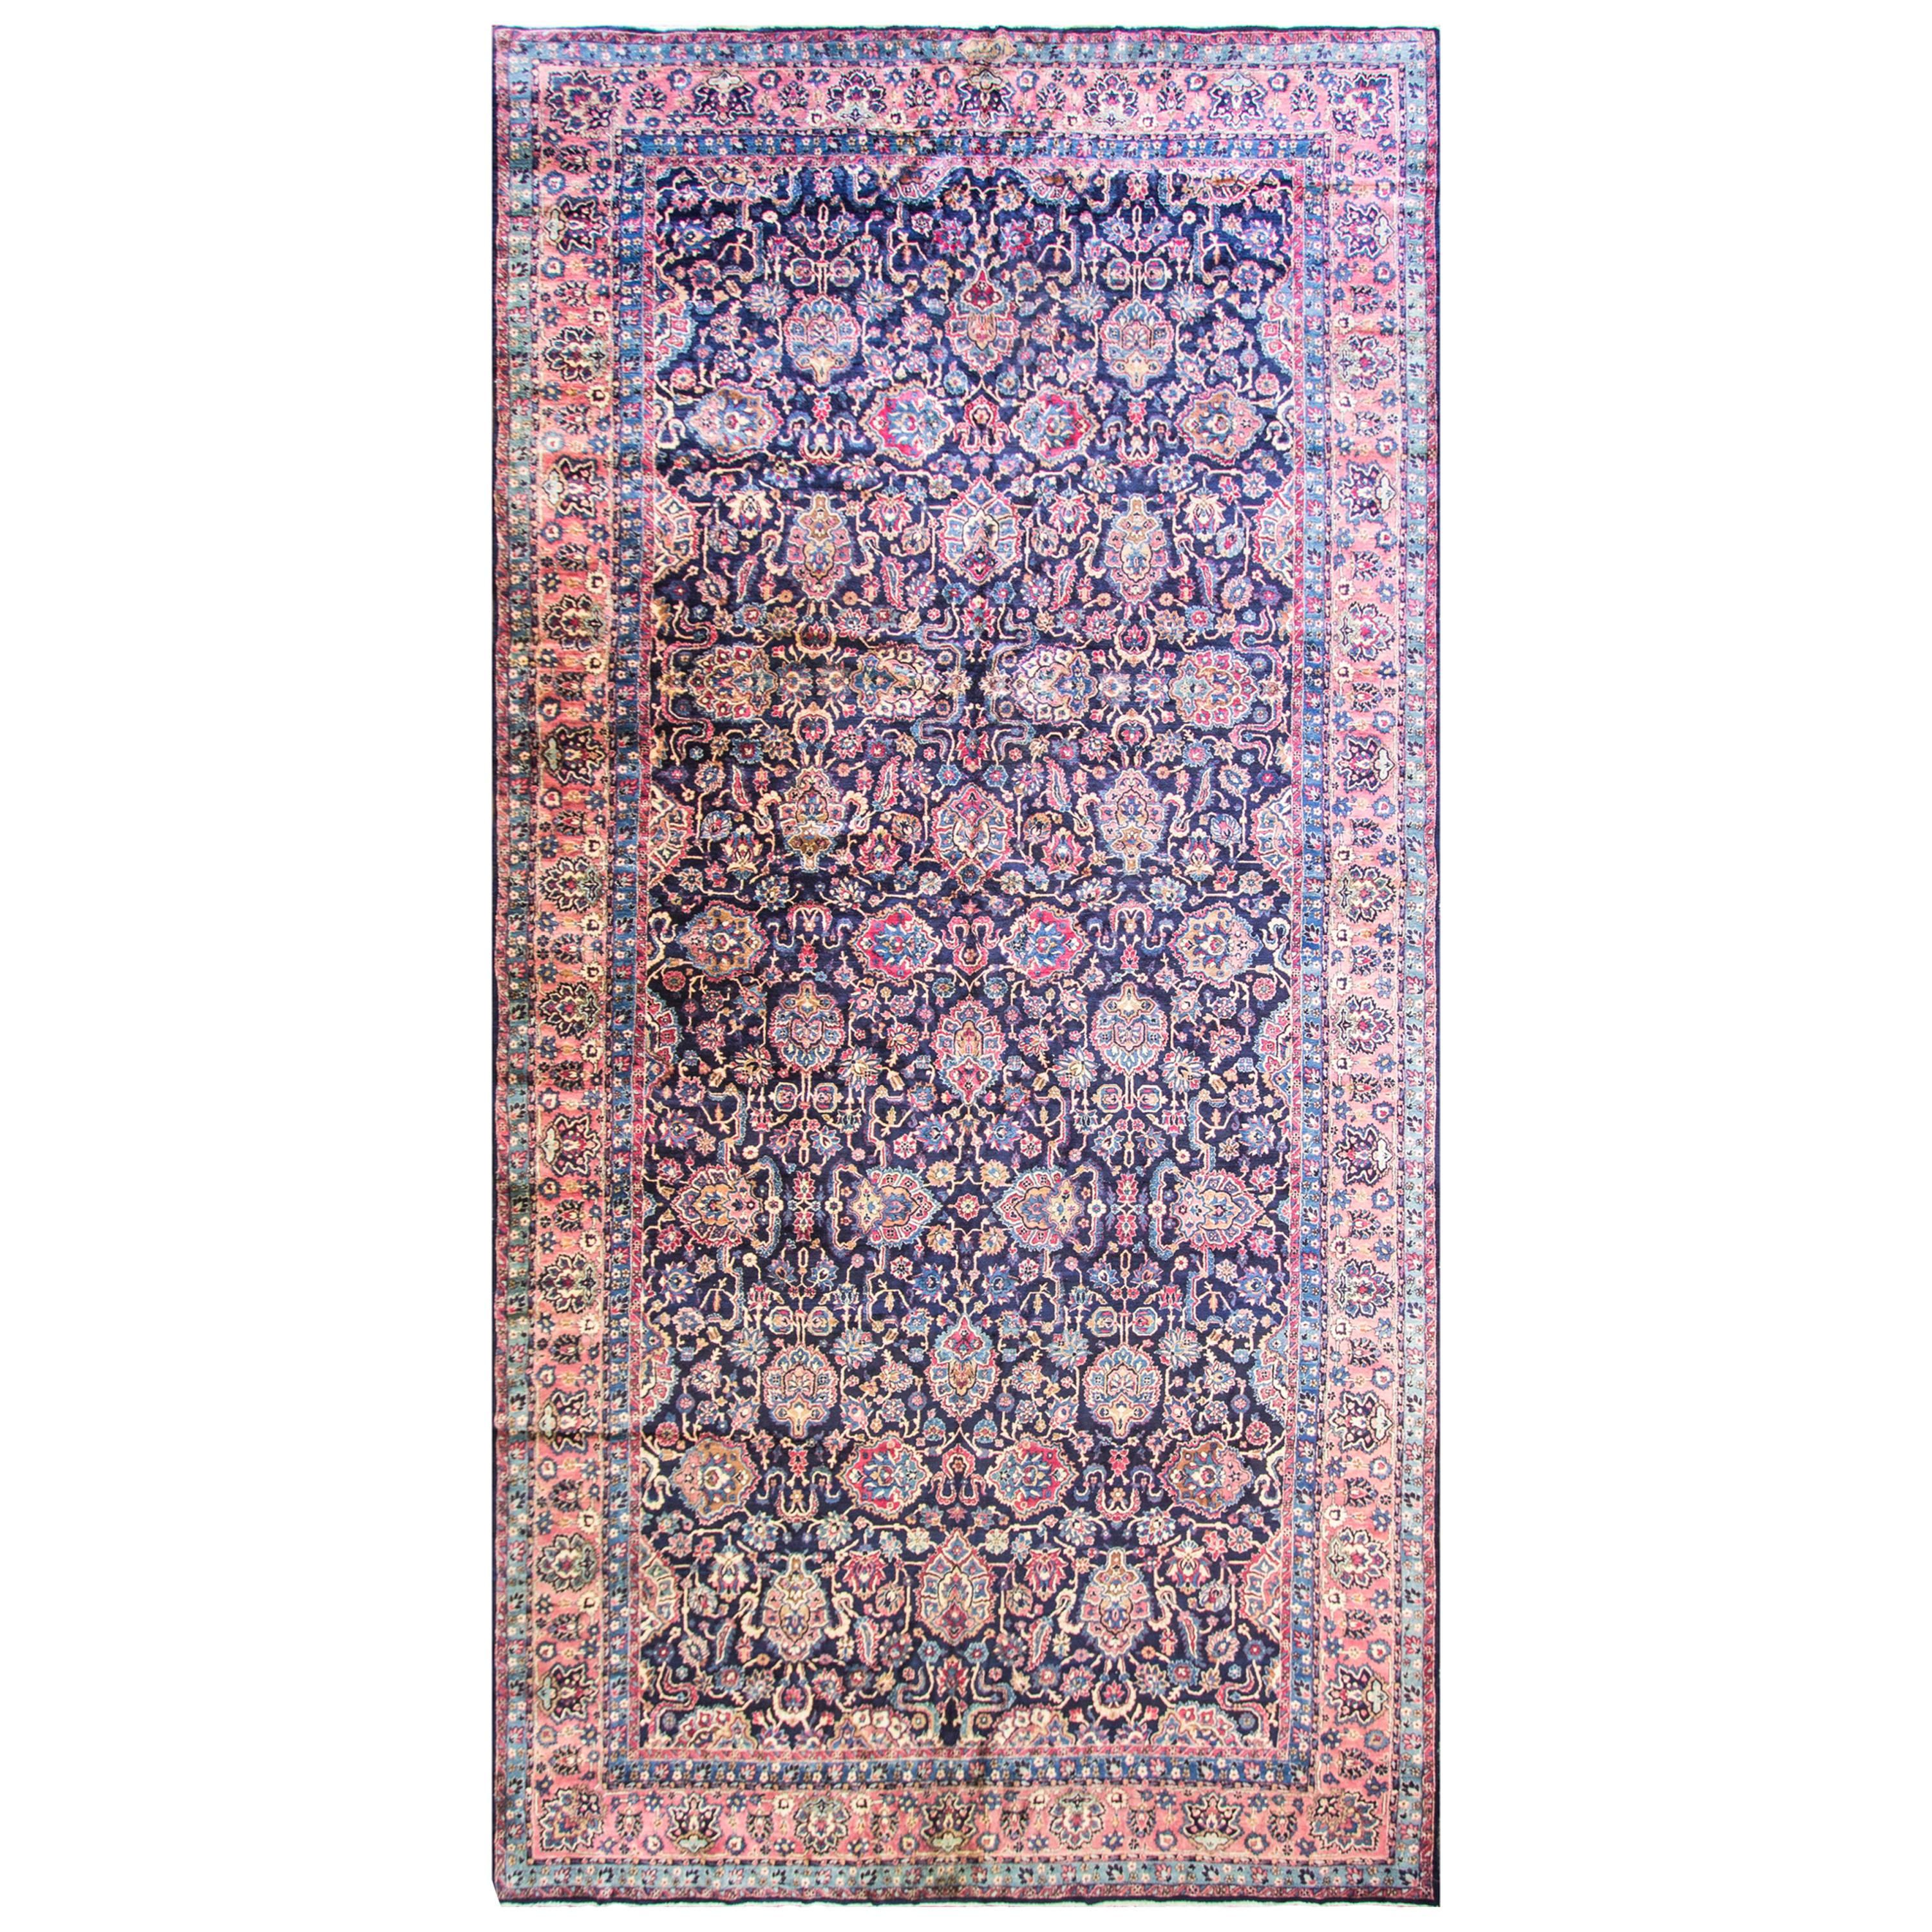 Amazing Oversize Antique Persian Kerman Carpet For Sale